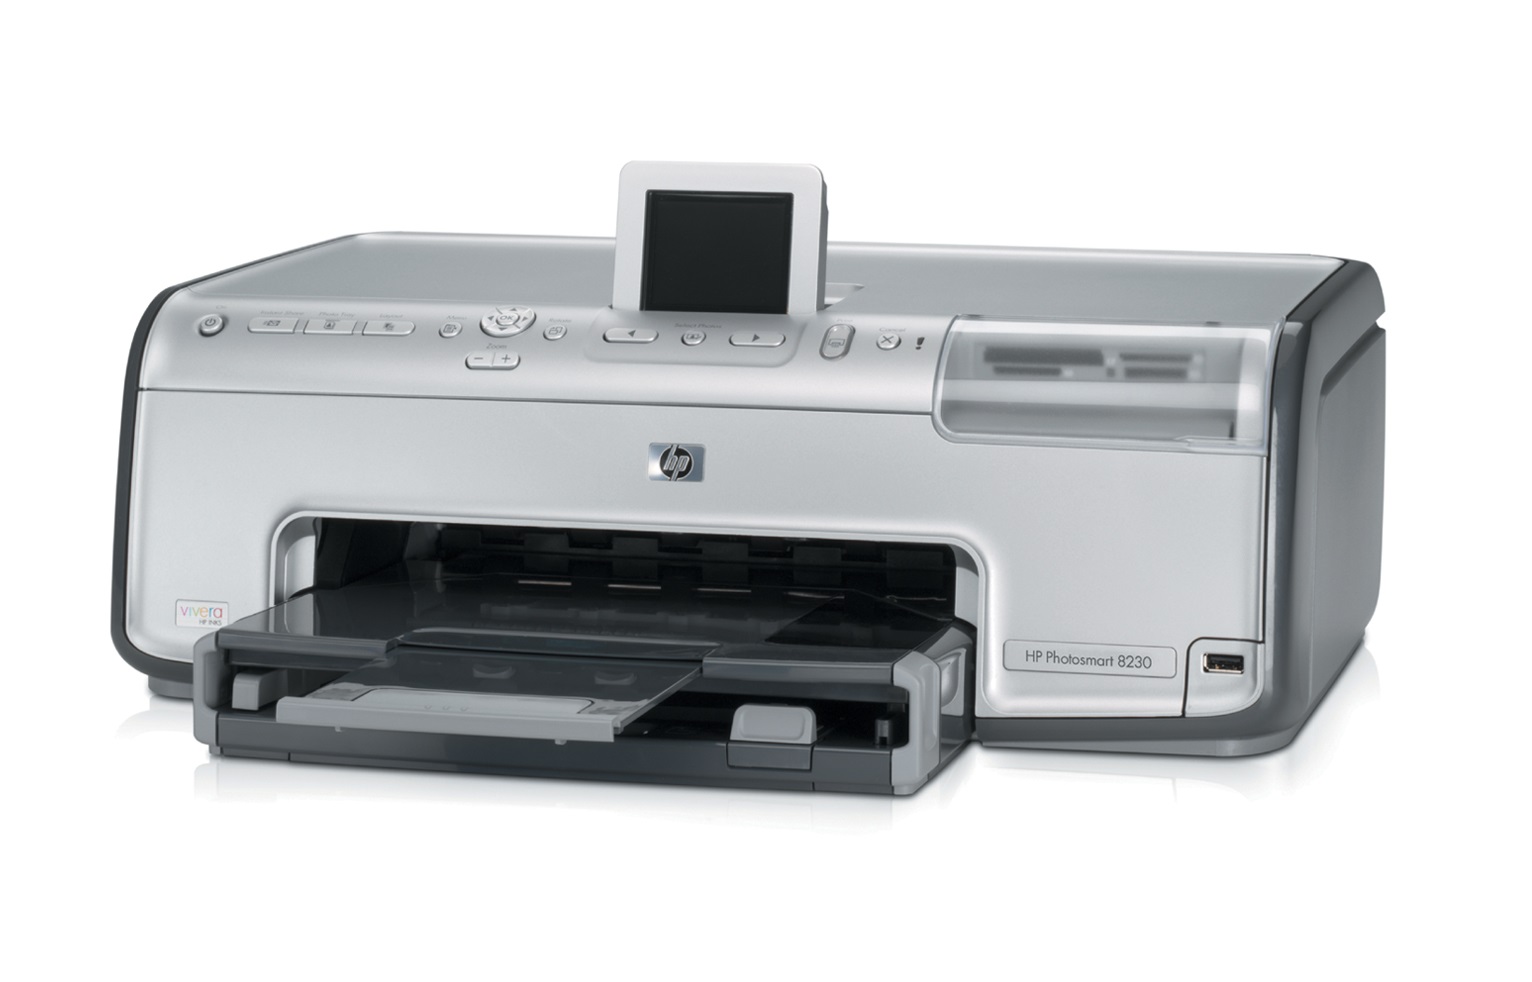 Tiskárna HP Photosmart 8230